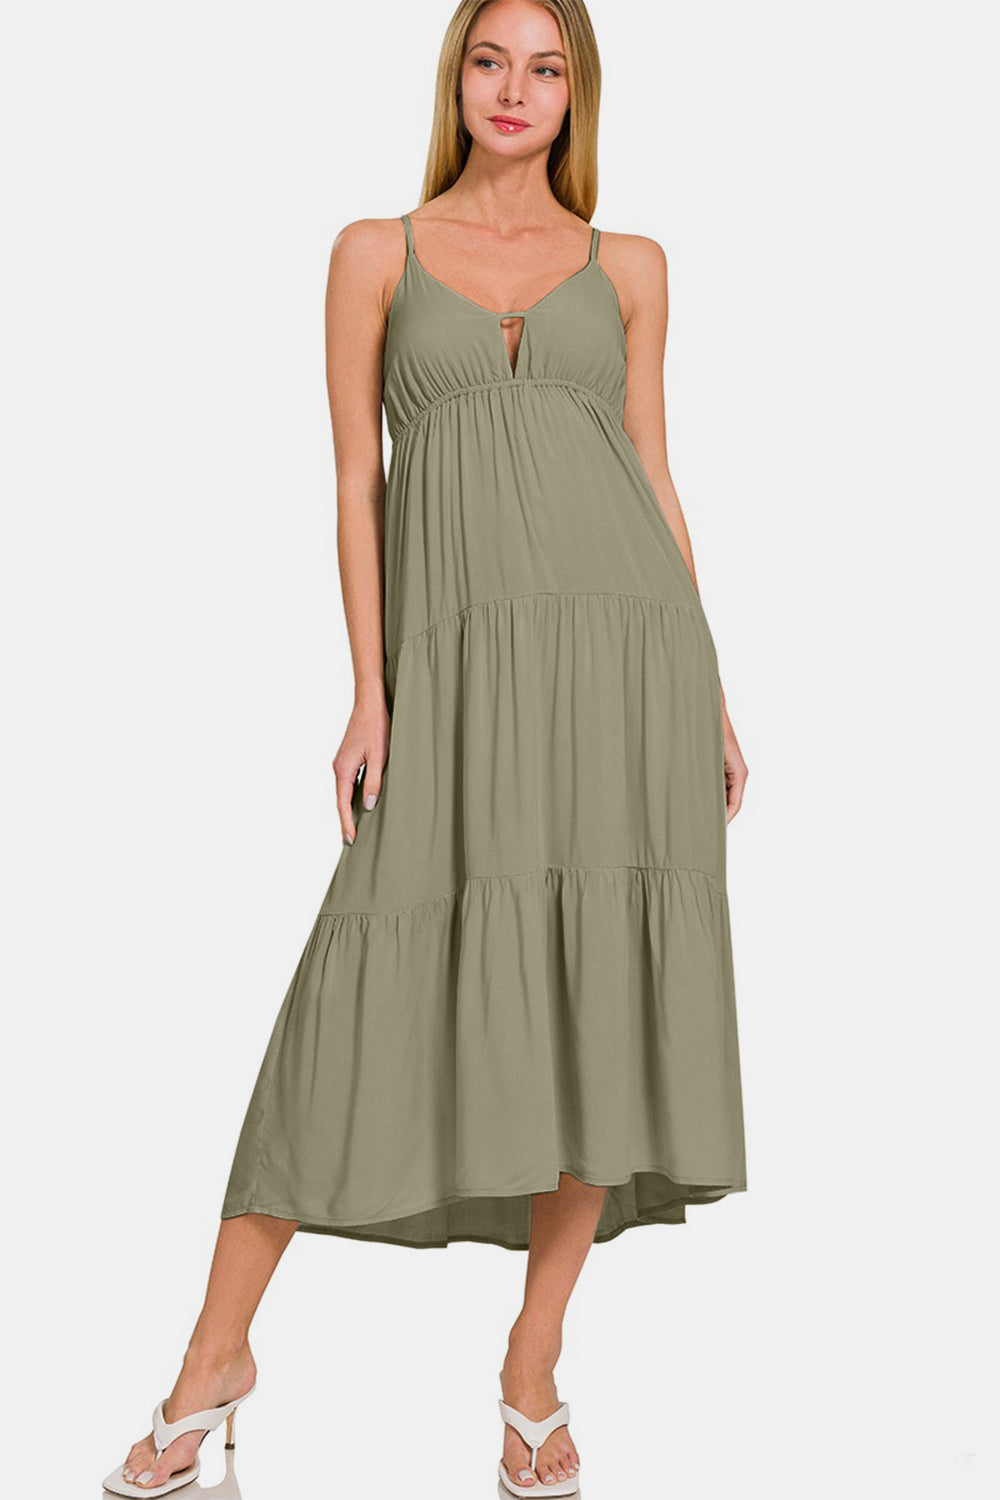 Mesa Verde Cami Dress